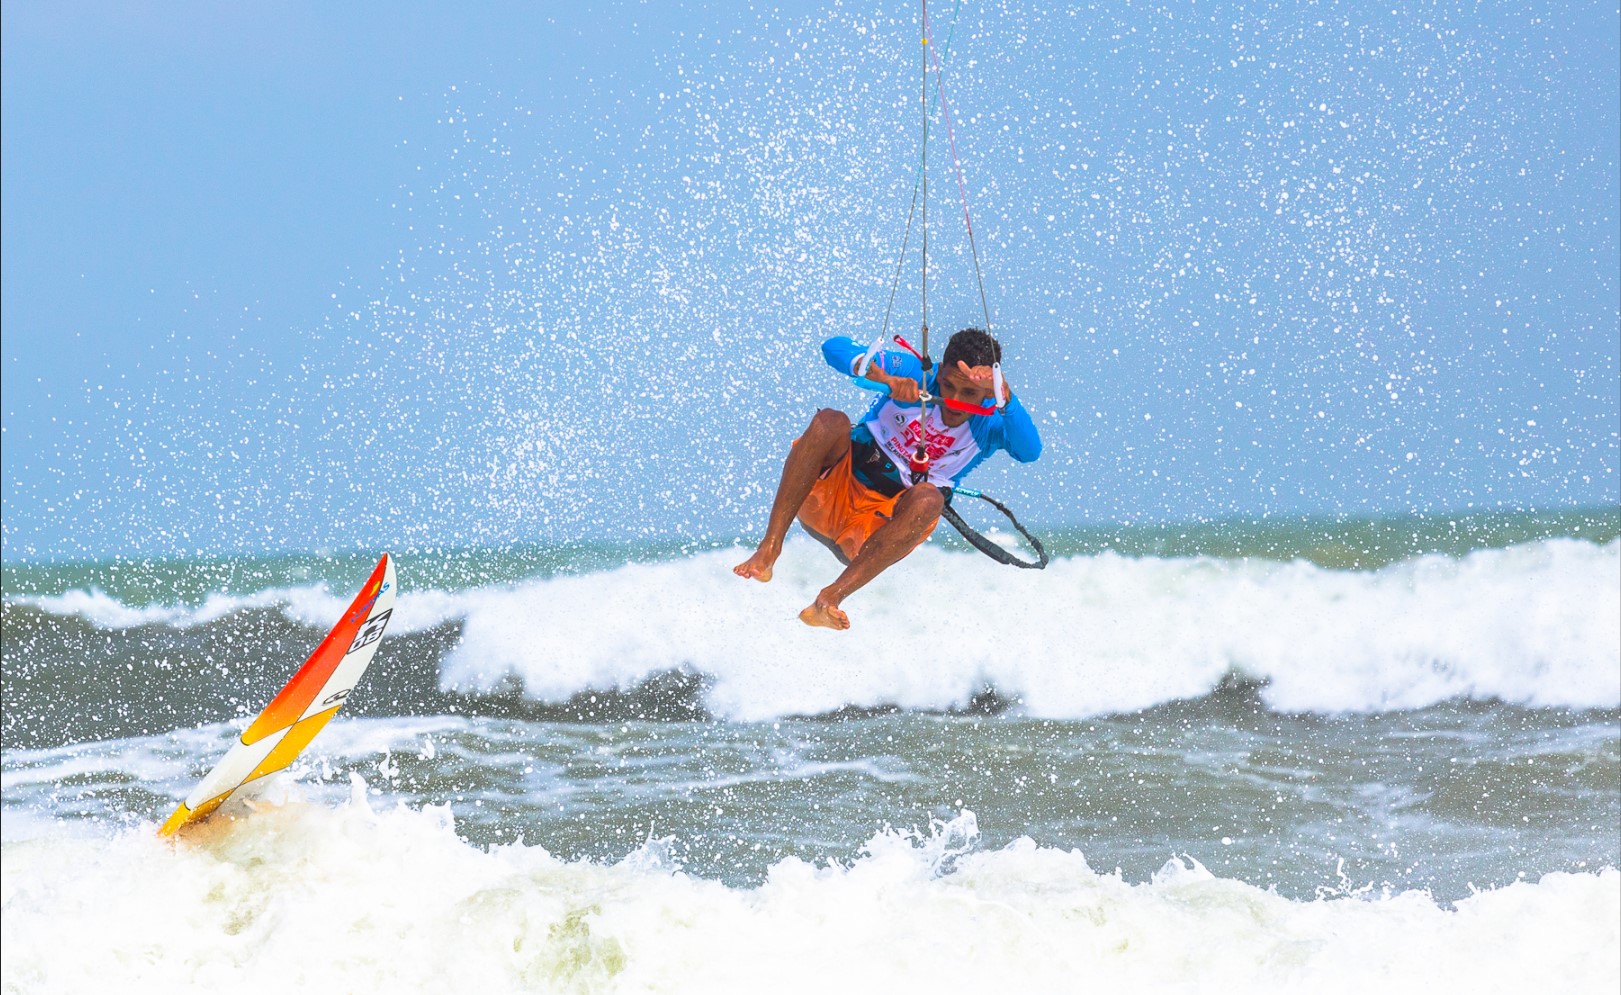 Pingtan's ideal kite-surfing conditions wins praises of international kite-surfers